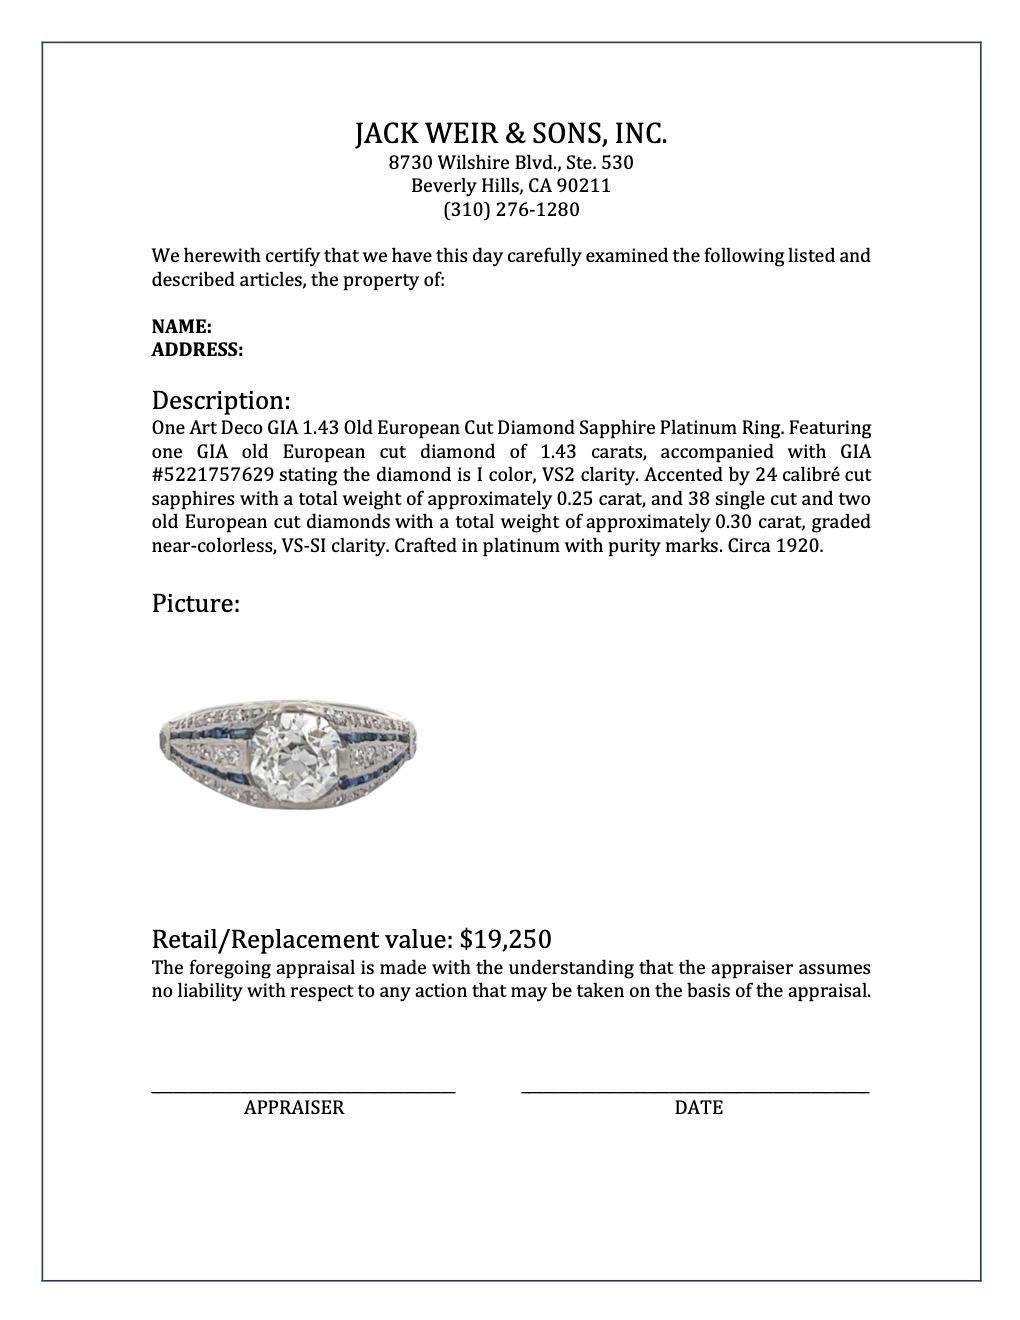 Art Deco GIA 1.43 Old European Cut Diamond Sapphire Platinum Ring 4